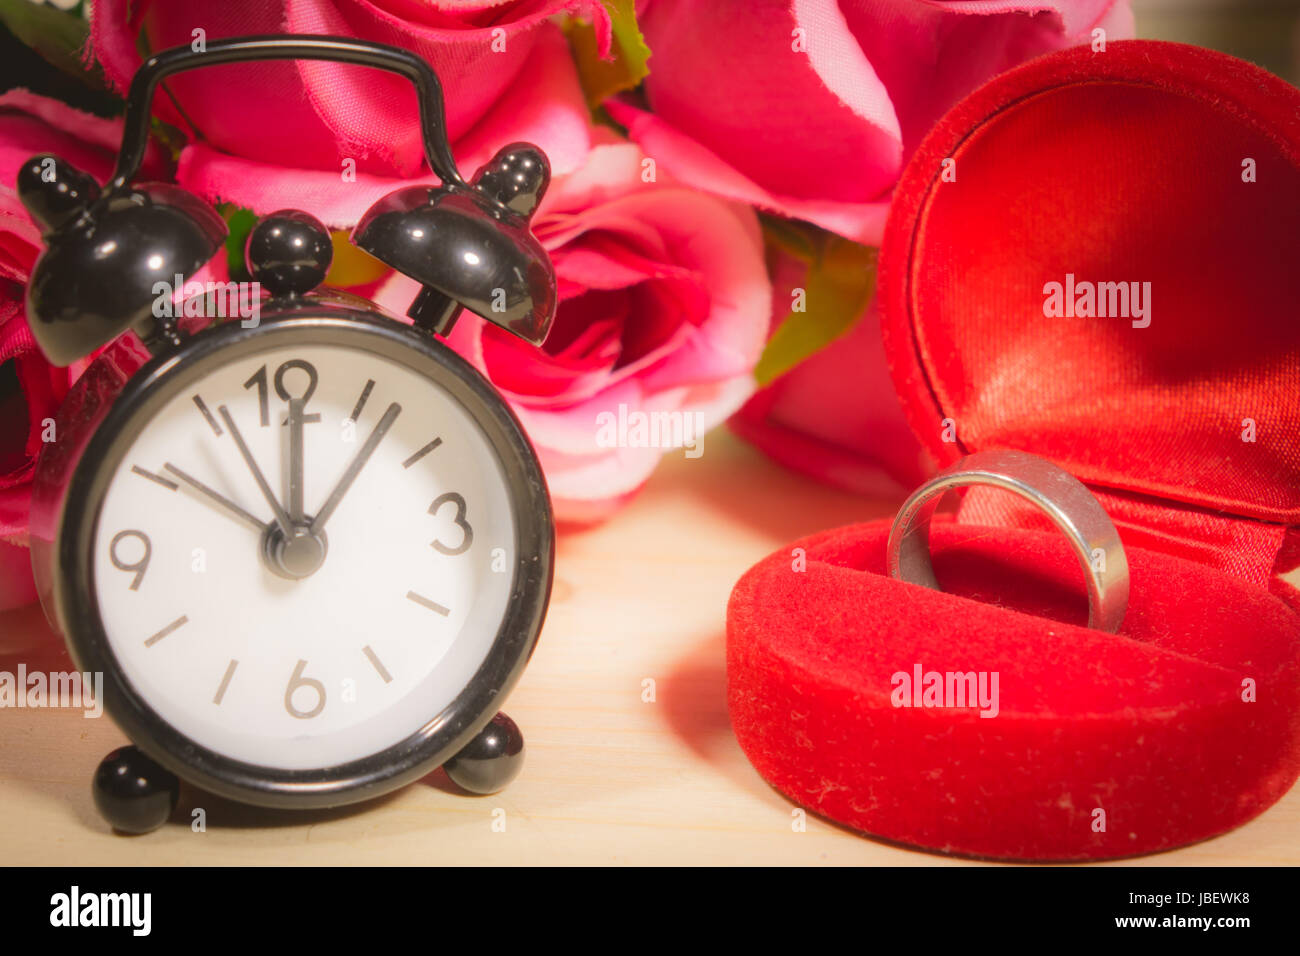 Wedding ring, alarm clock Tell time in life Stock Photo